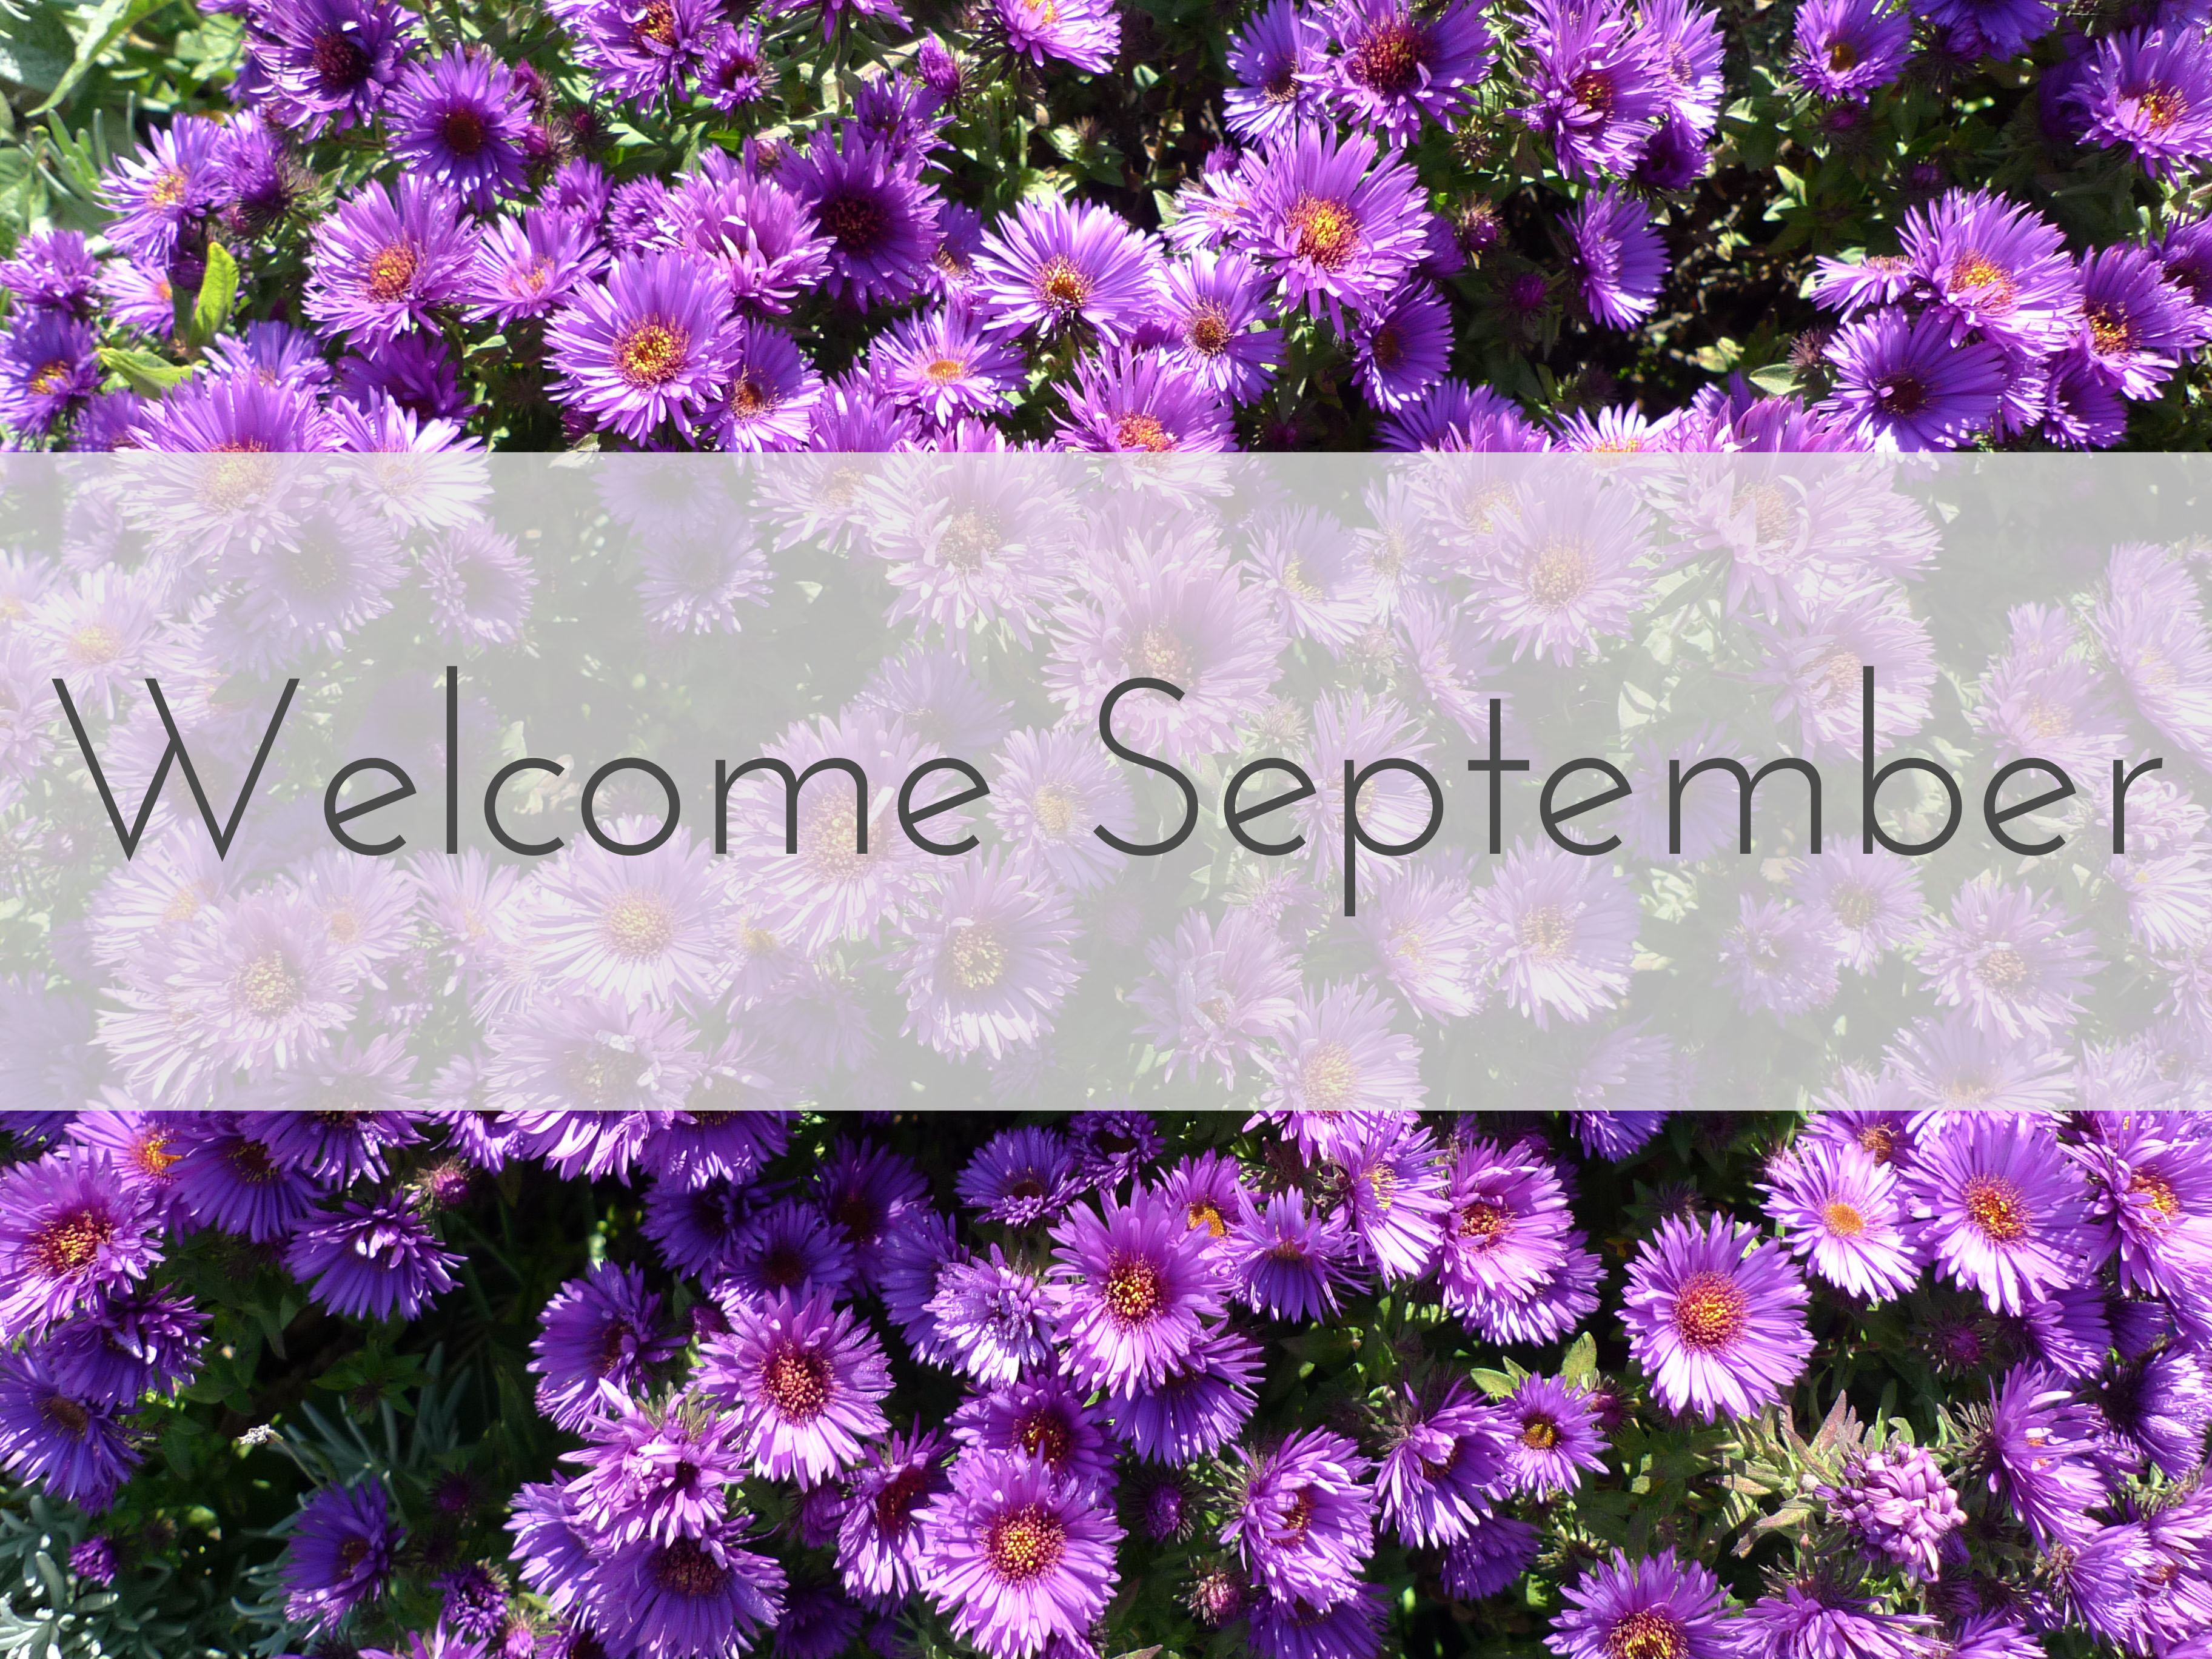 Welcome September